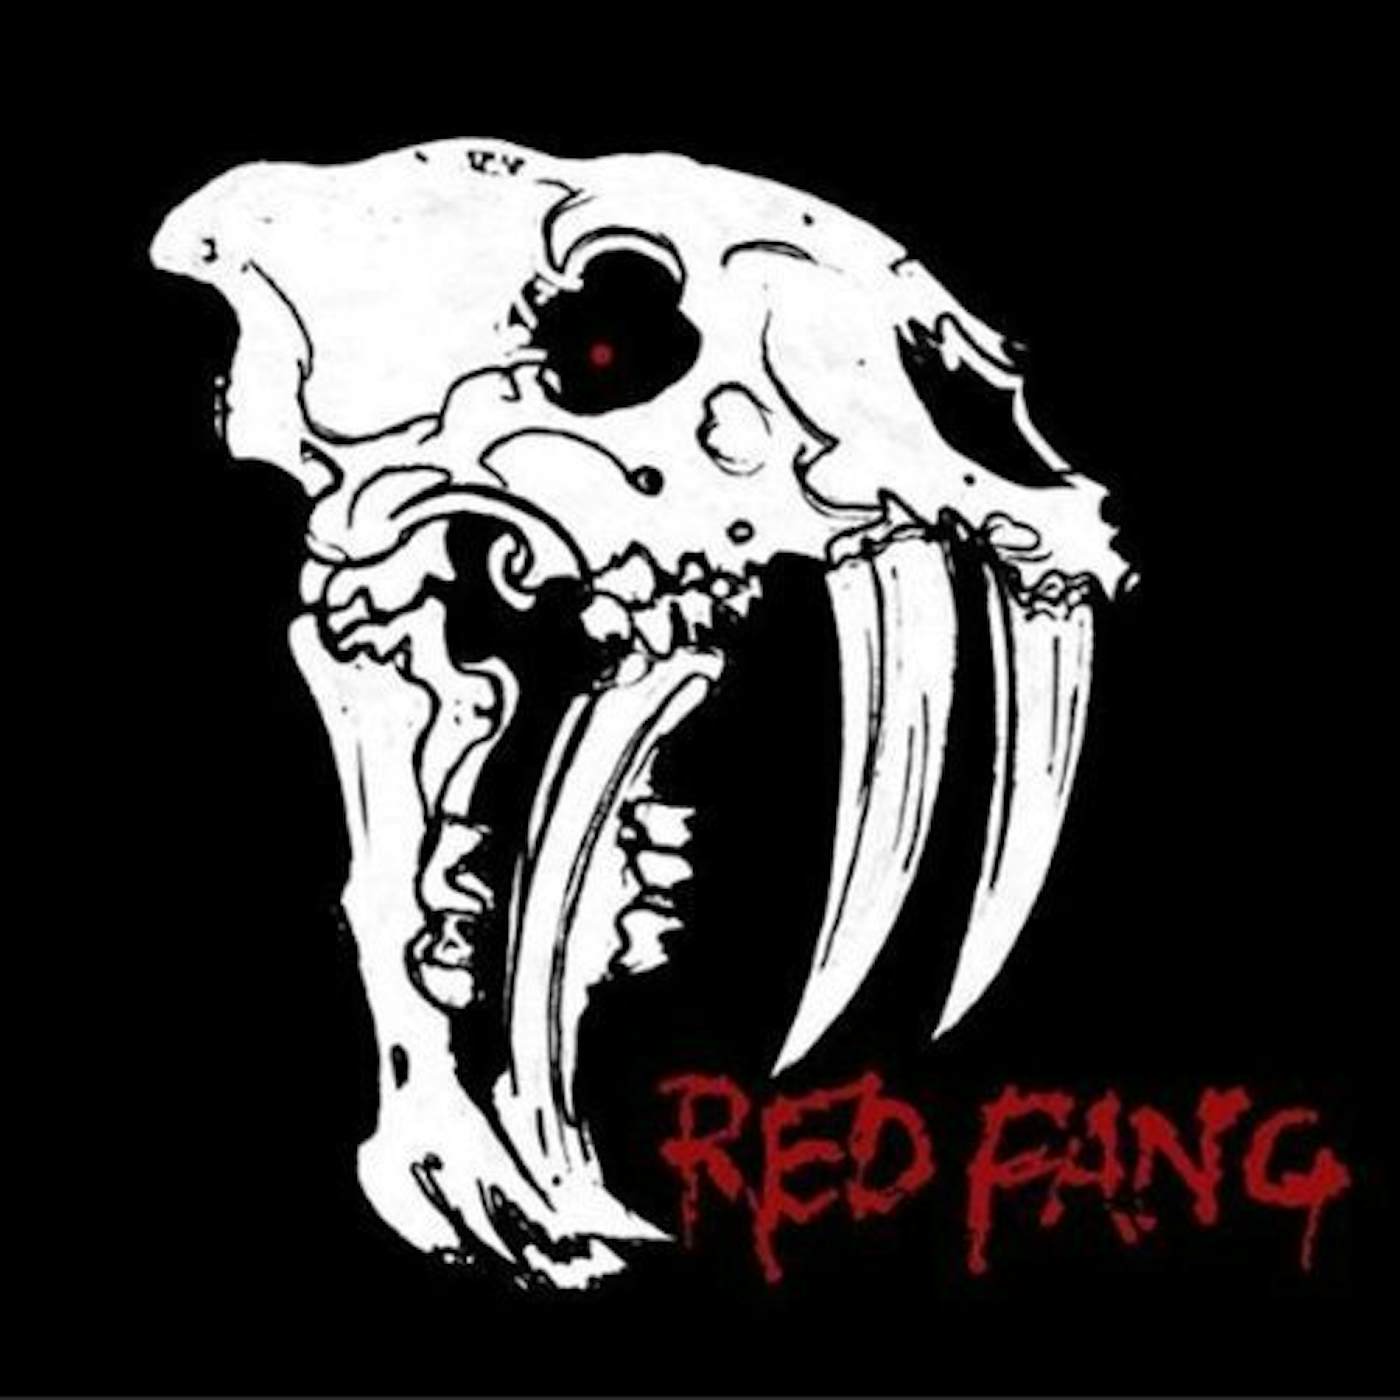 Red Fang Vinyl Record